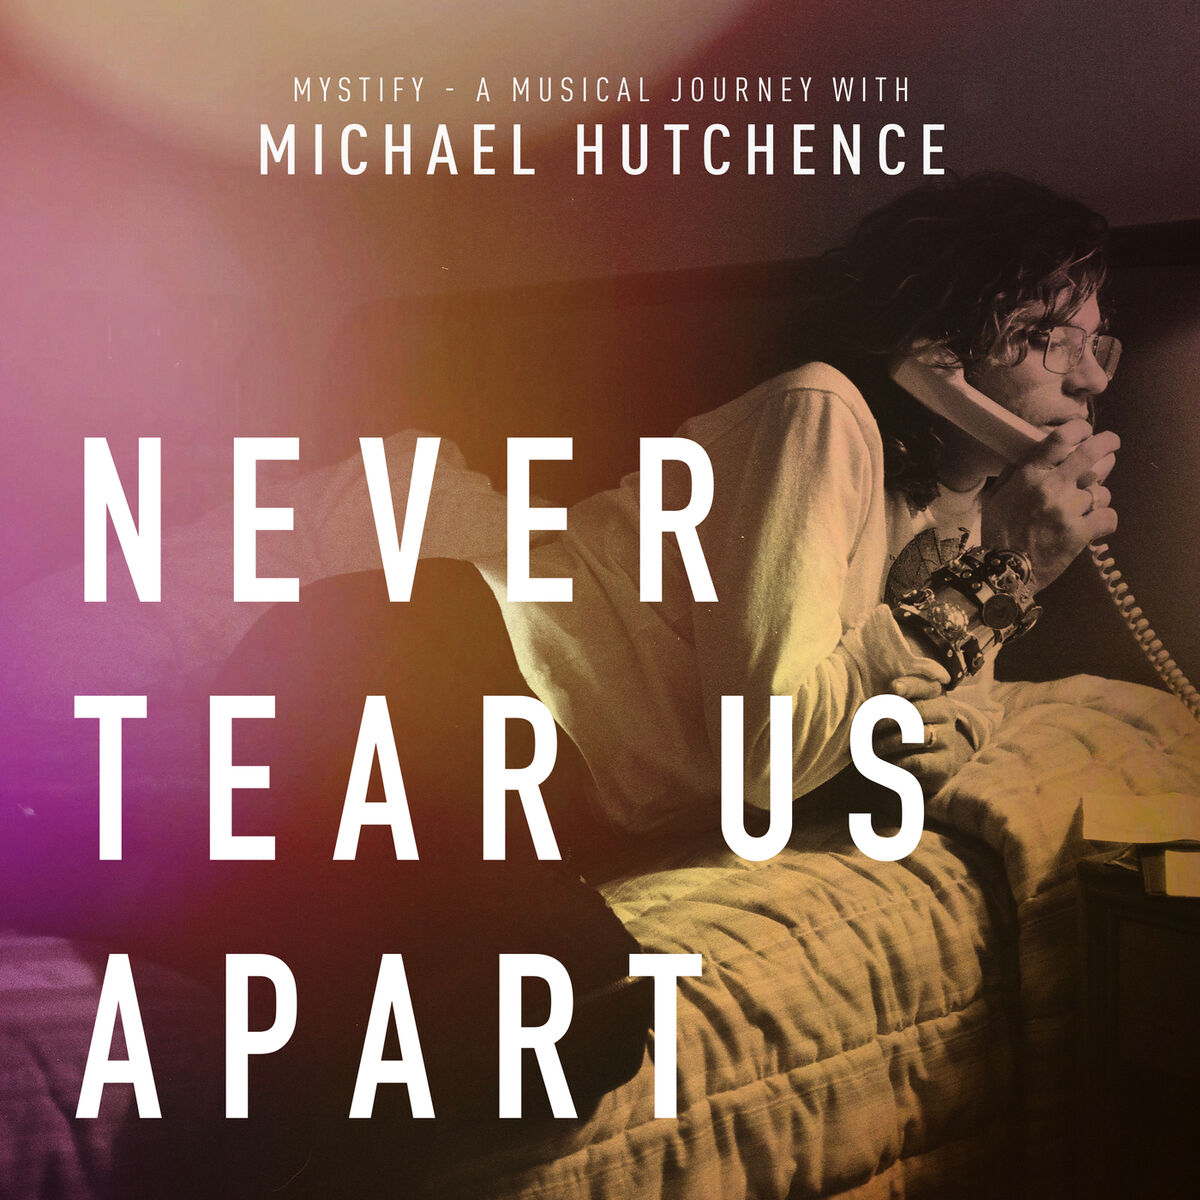 Michael Hutchence: albums